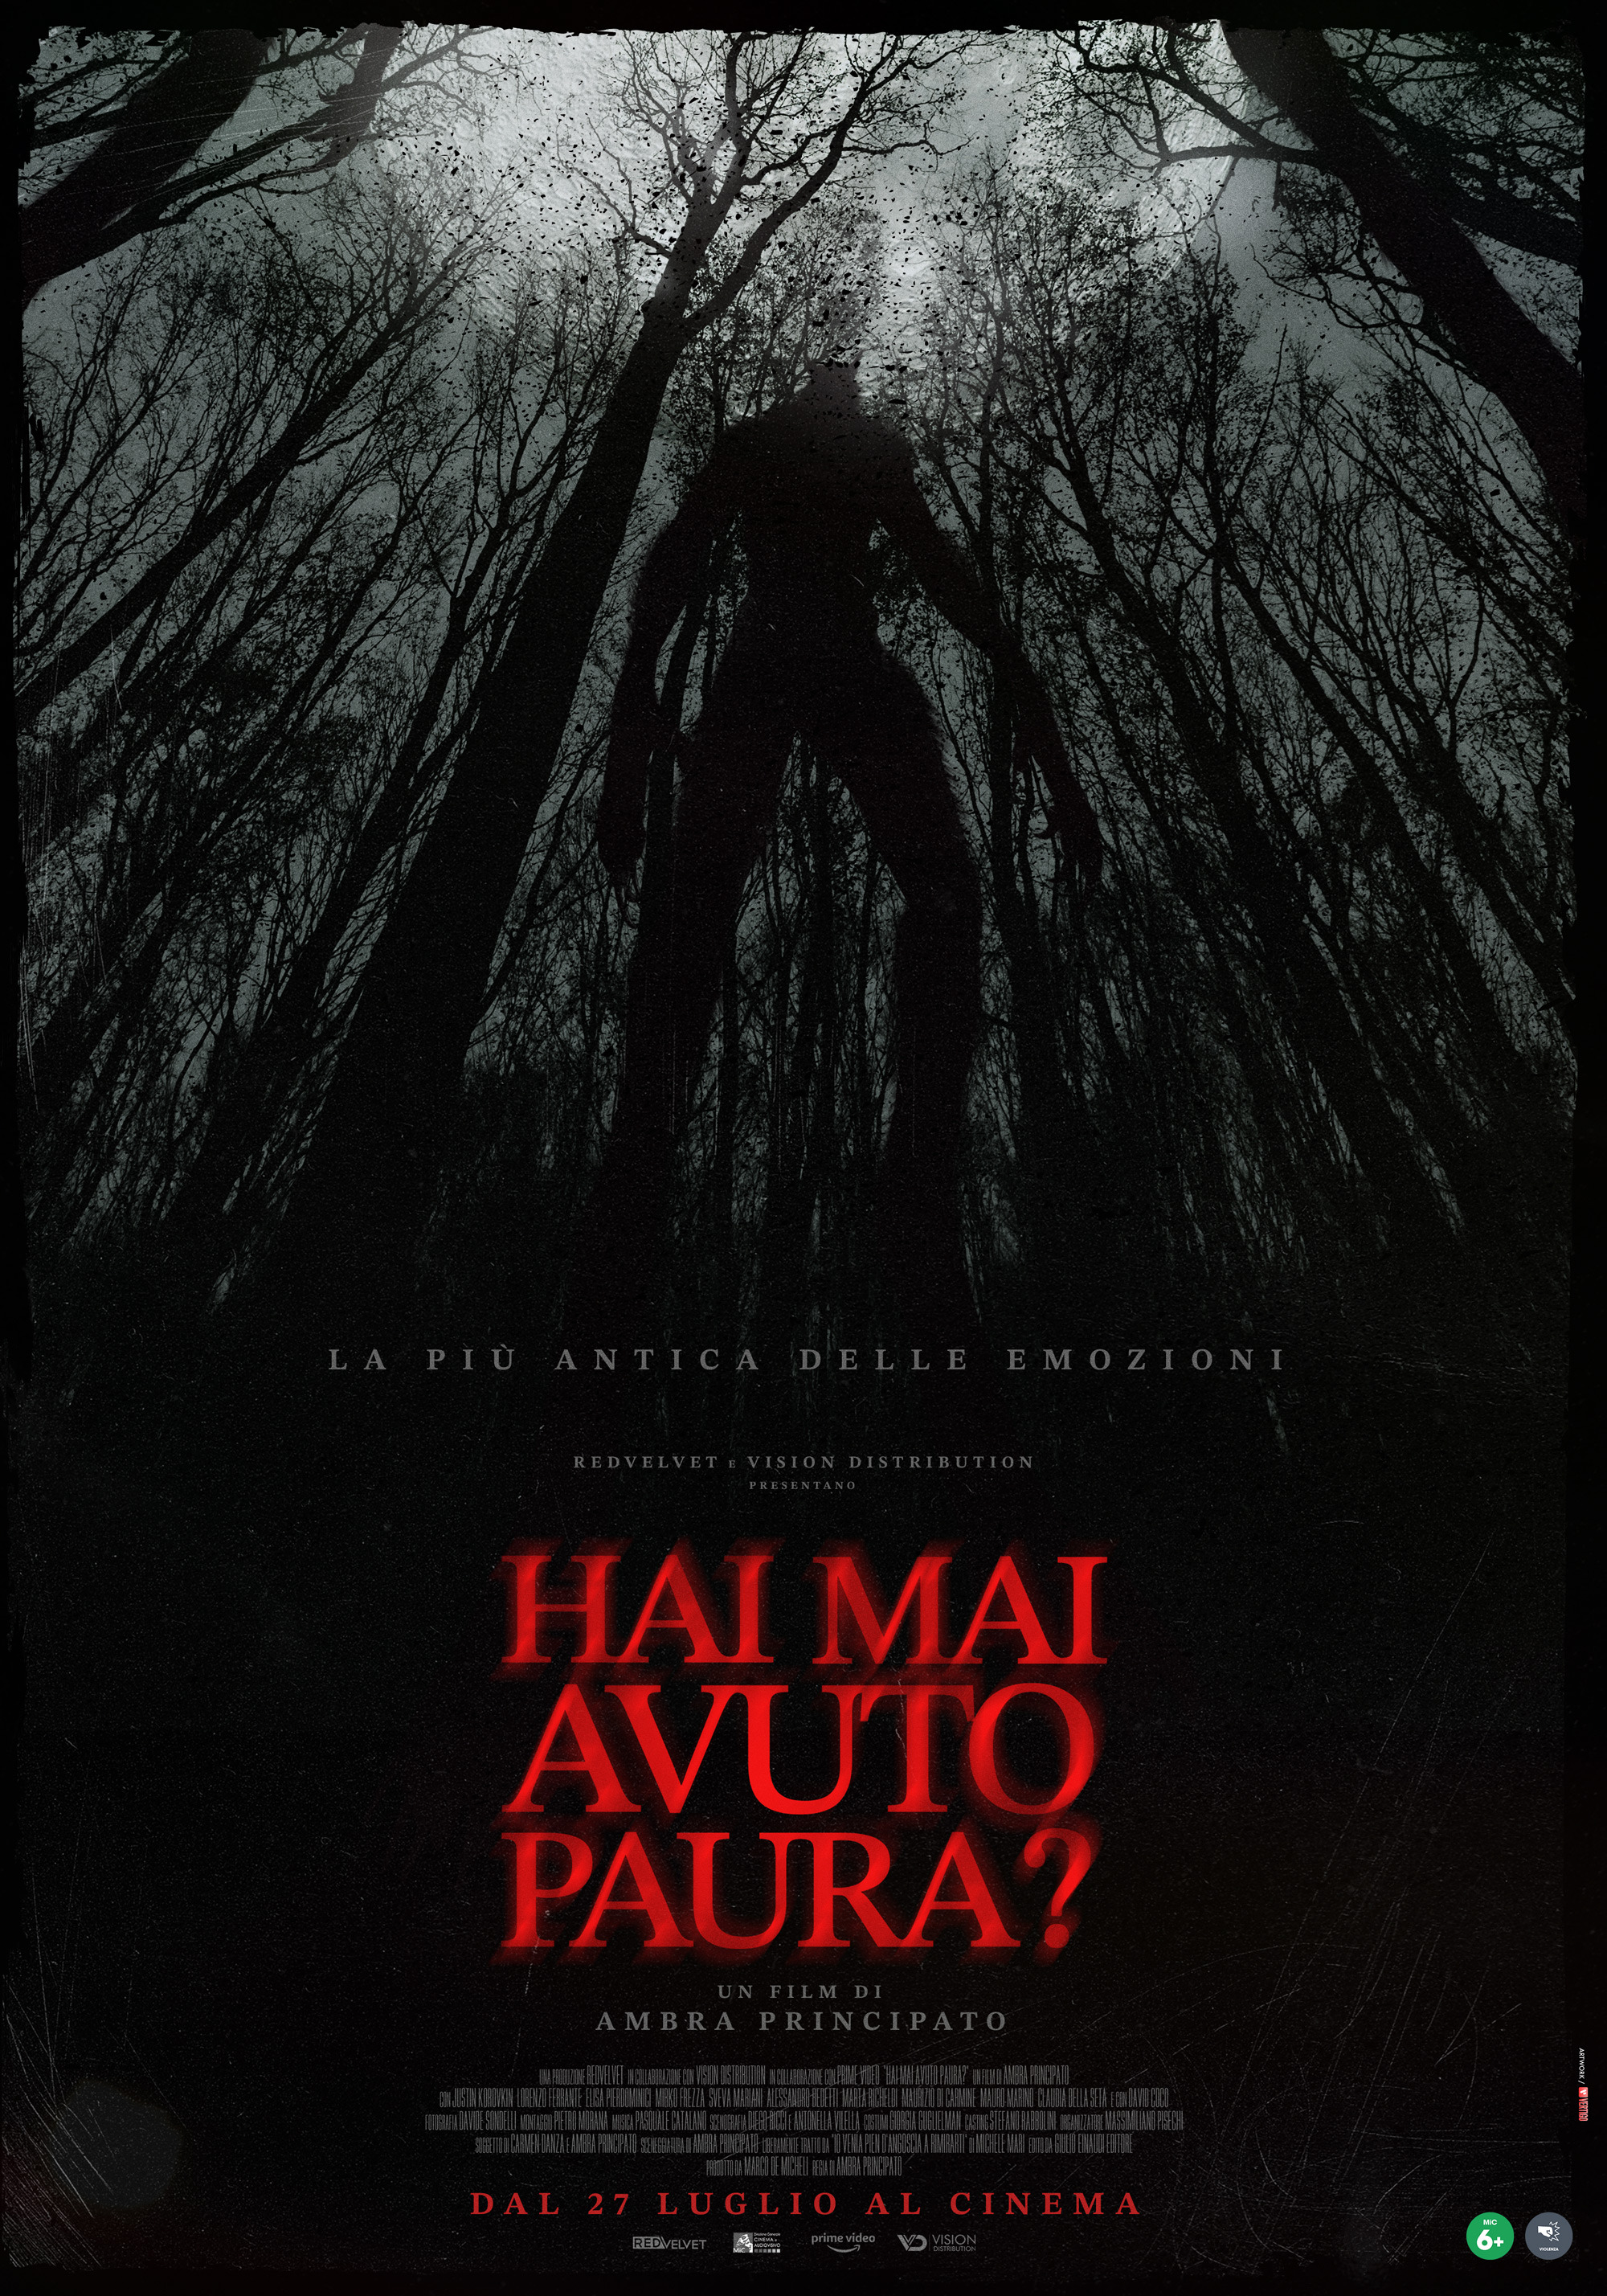 Mega Sized Movie Poster Image for Hai mai avuto paura? (#2 of 3)